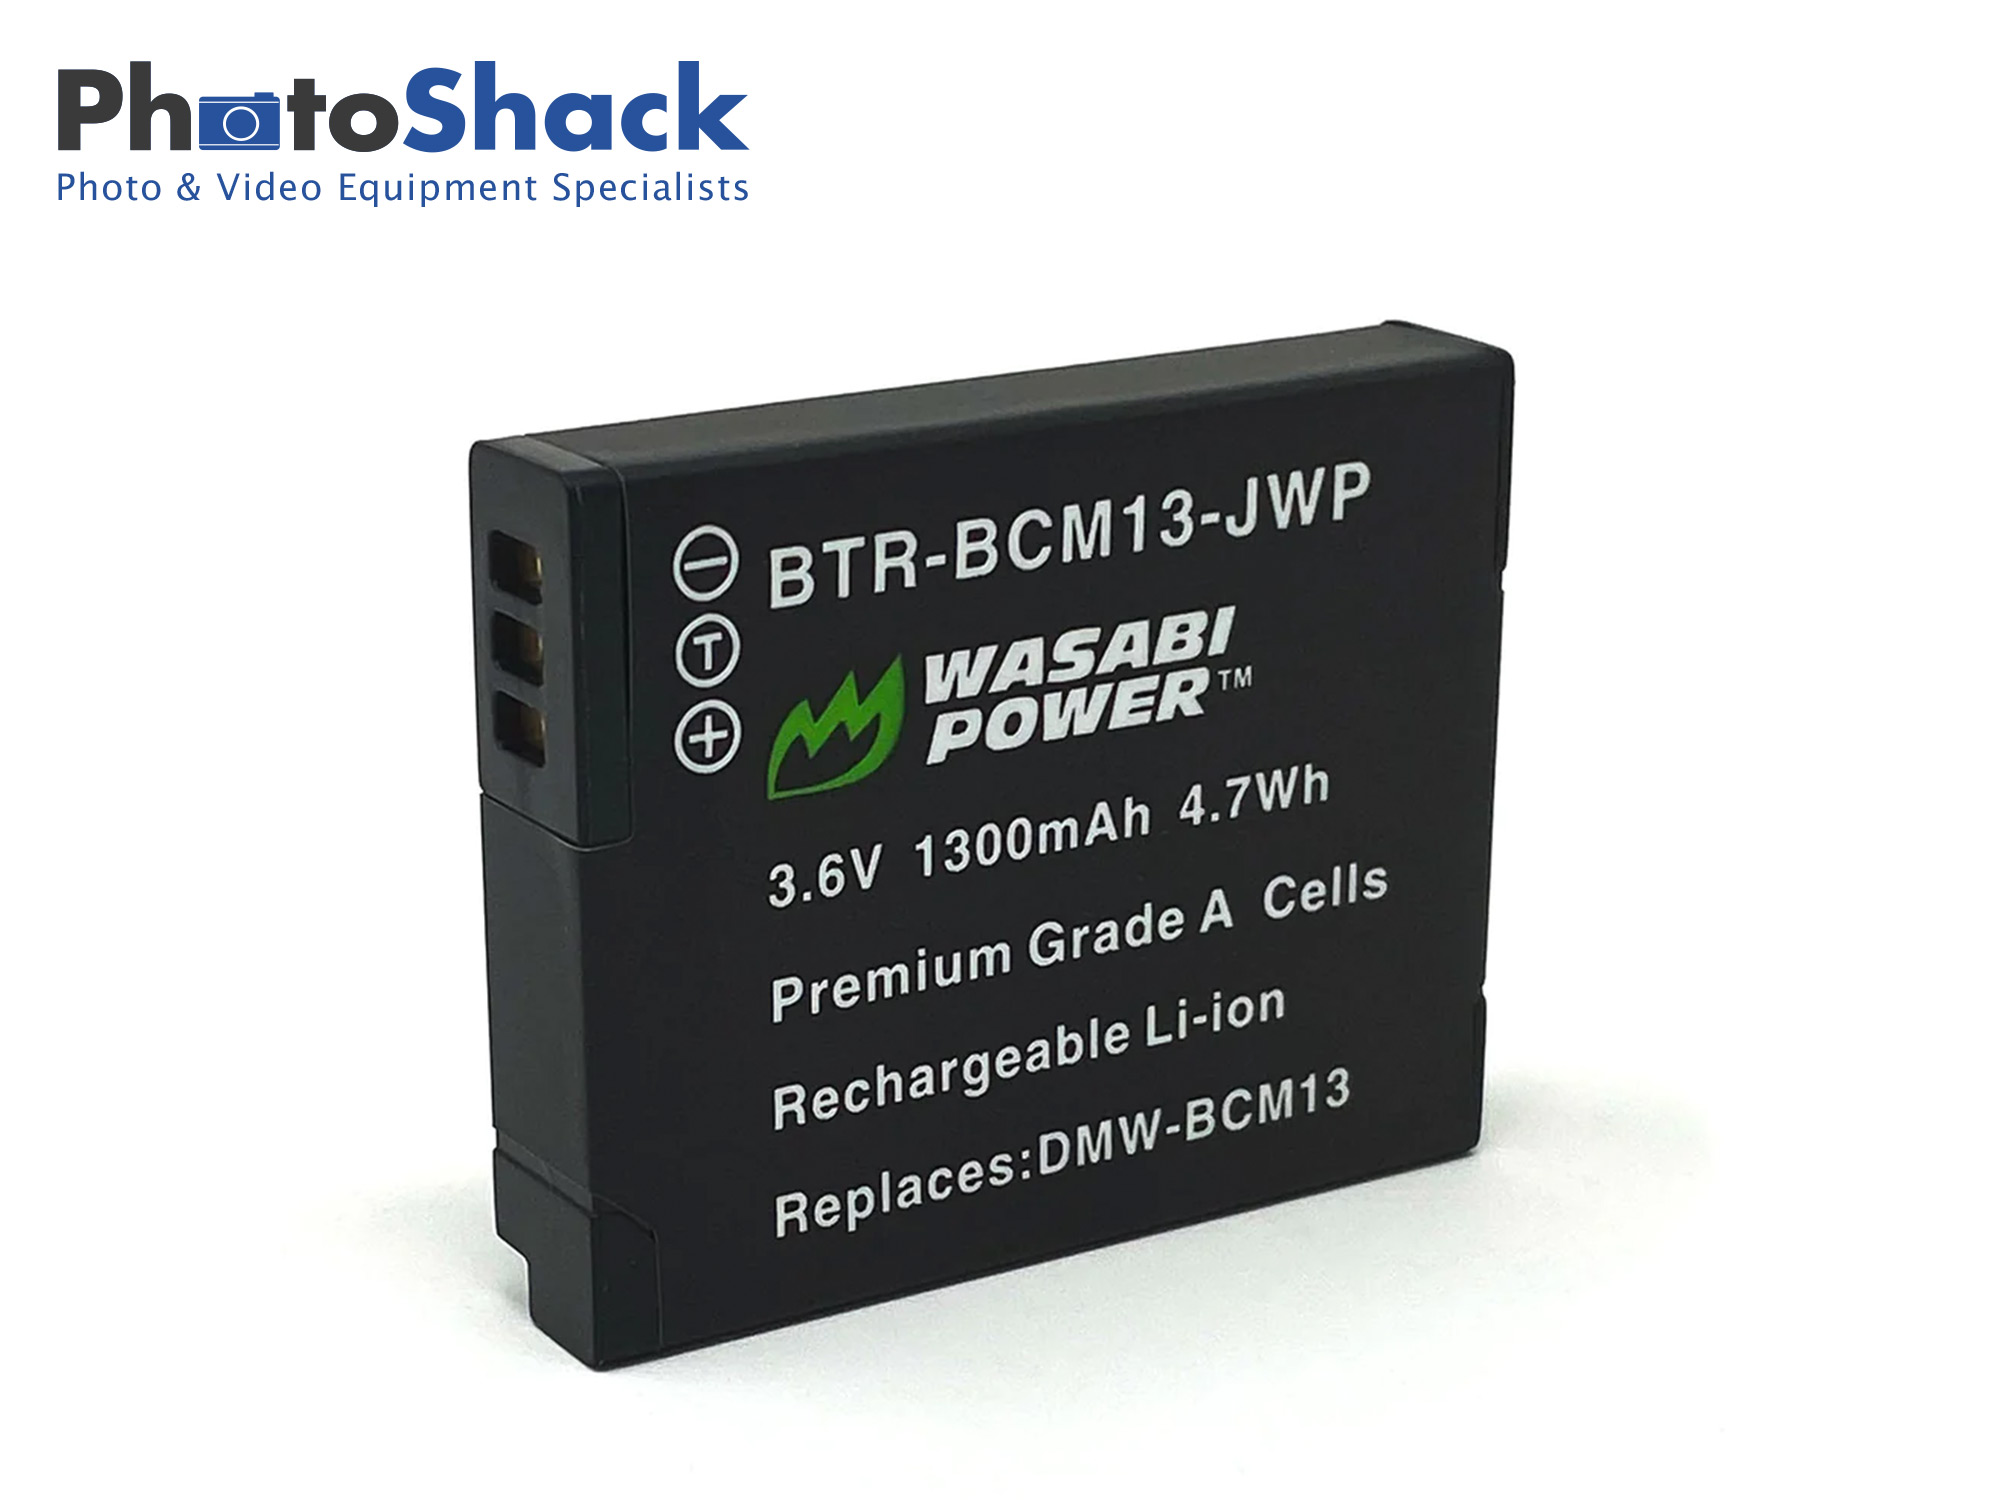 DMW-BCM13 Battery for Panasonic - Wasabi Power